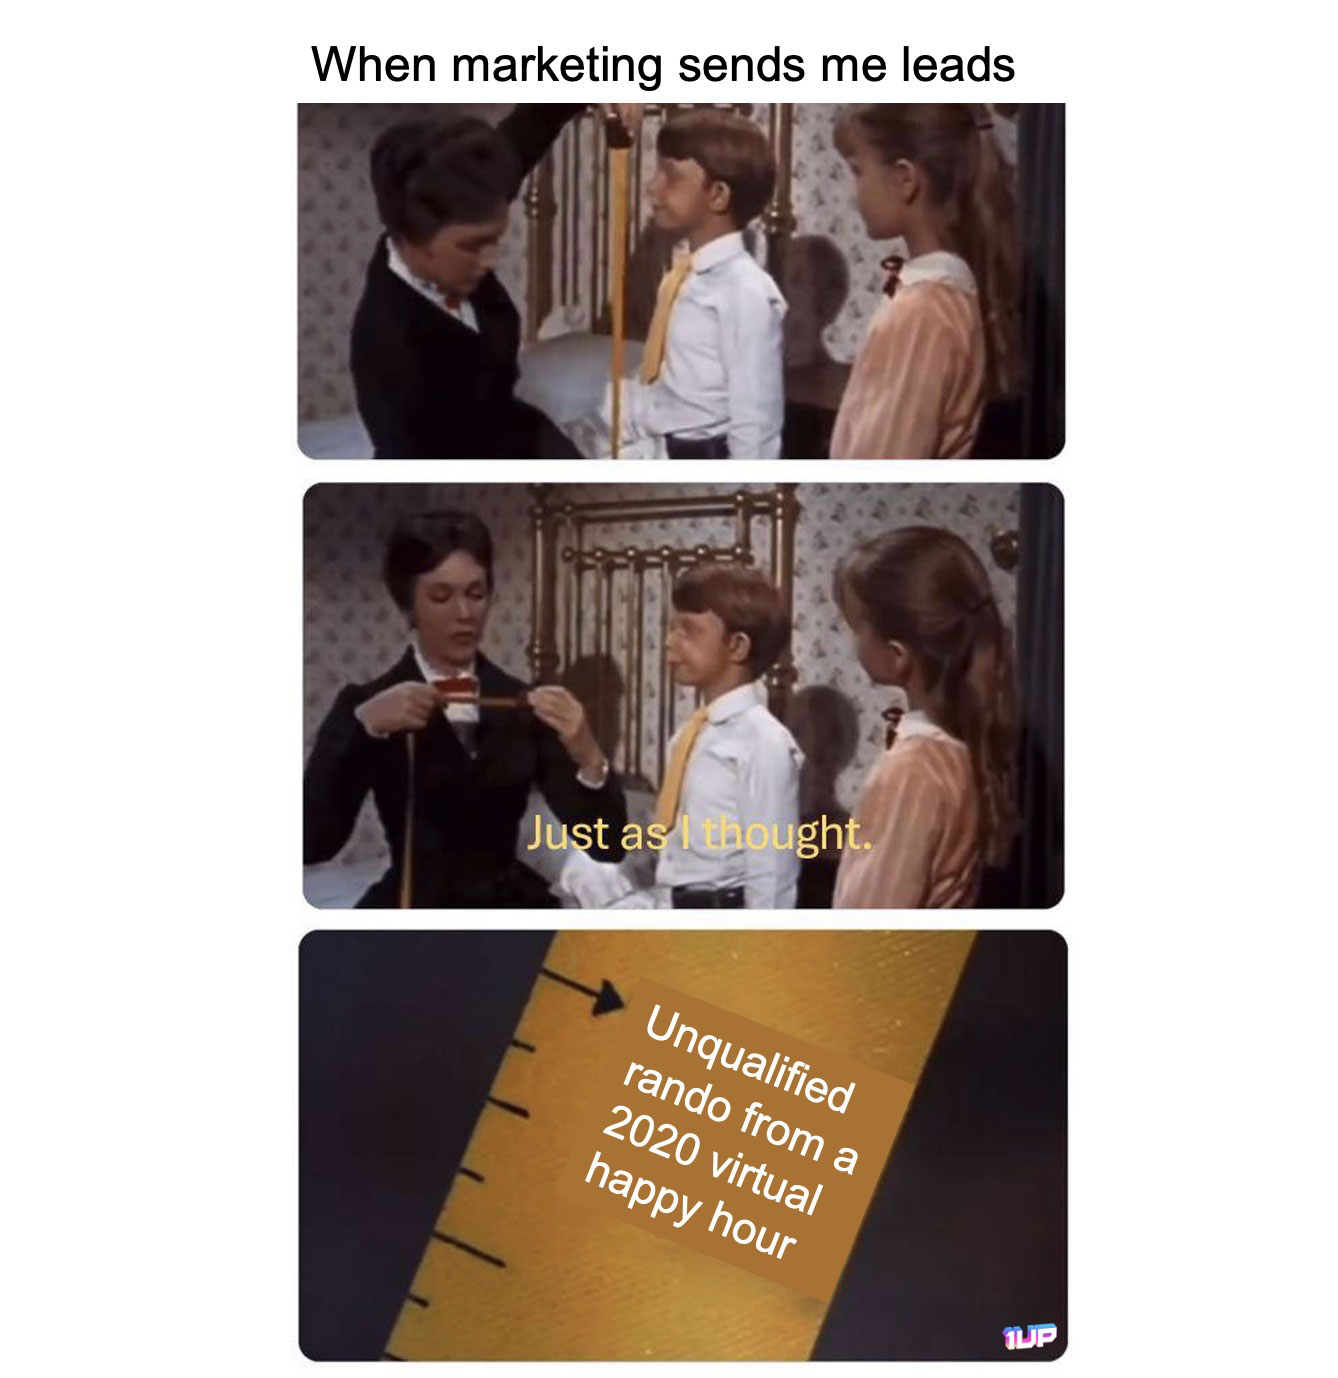 Marketing Lead Meme